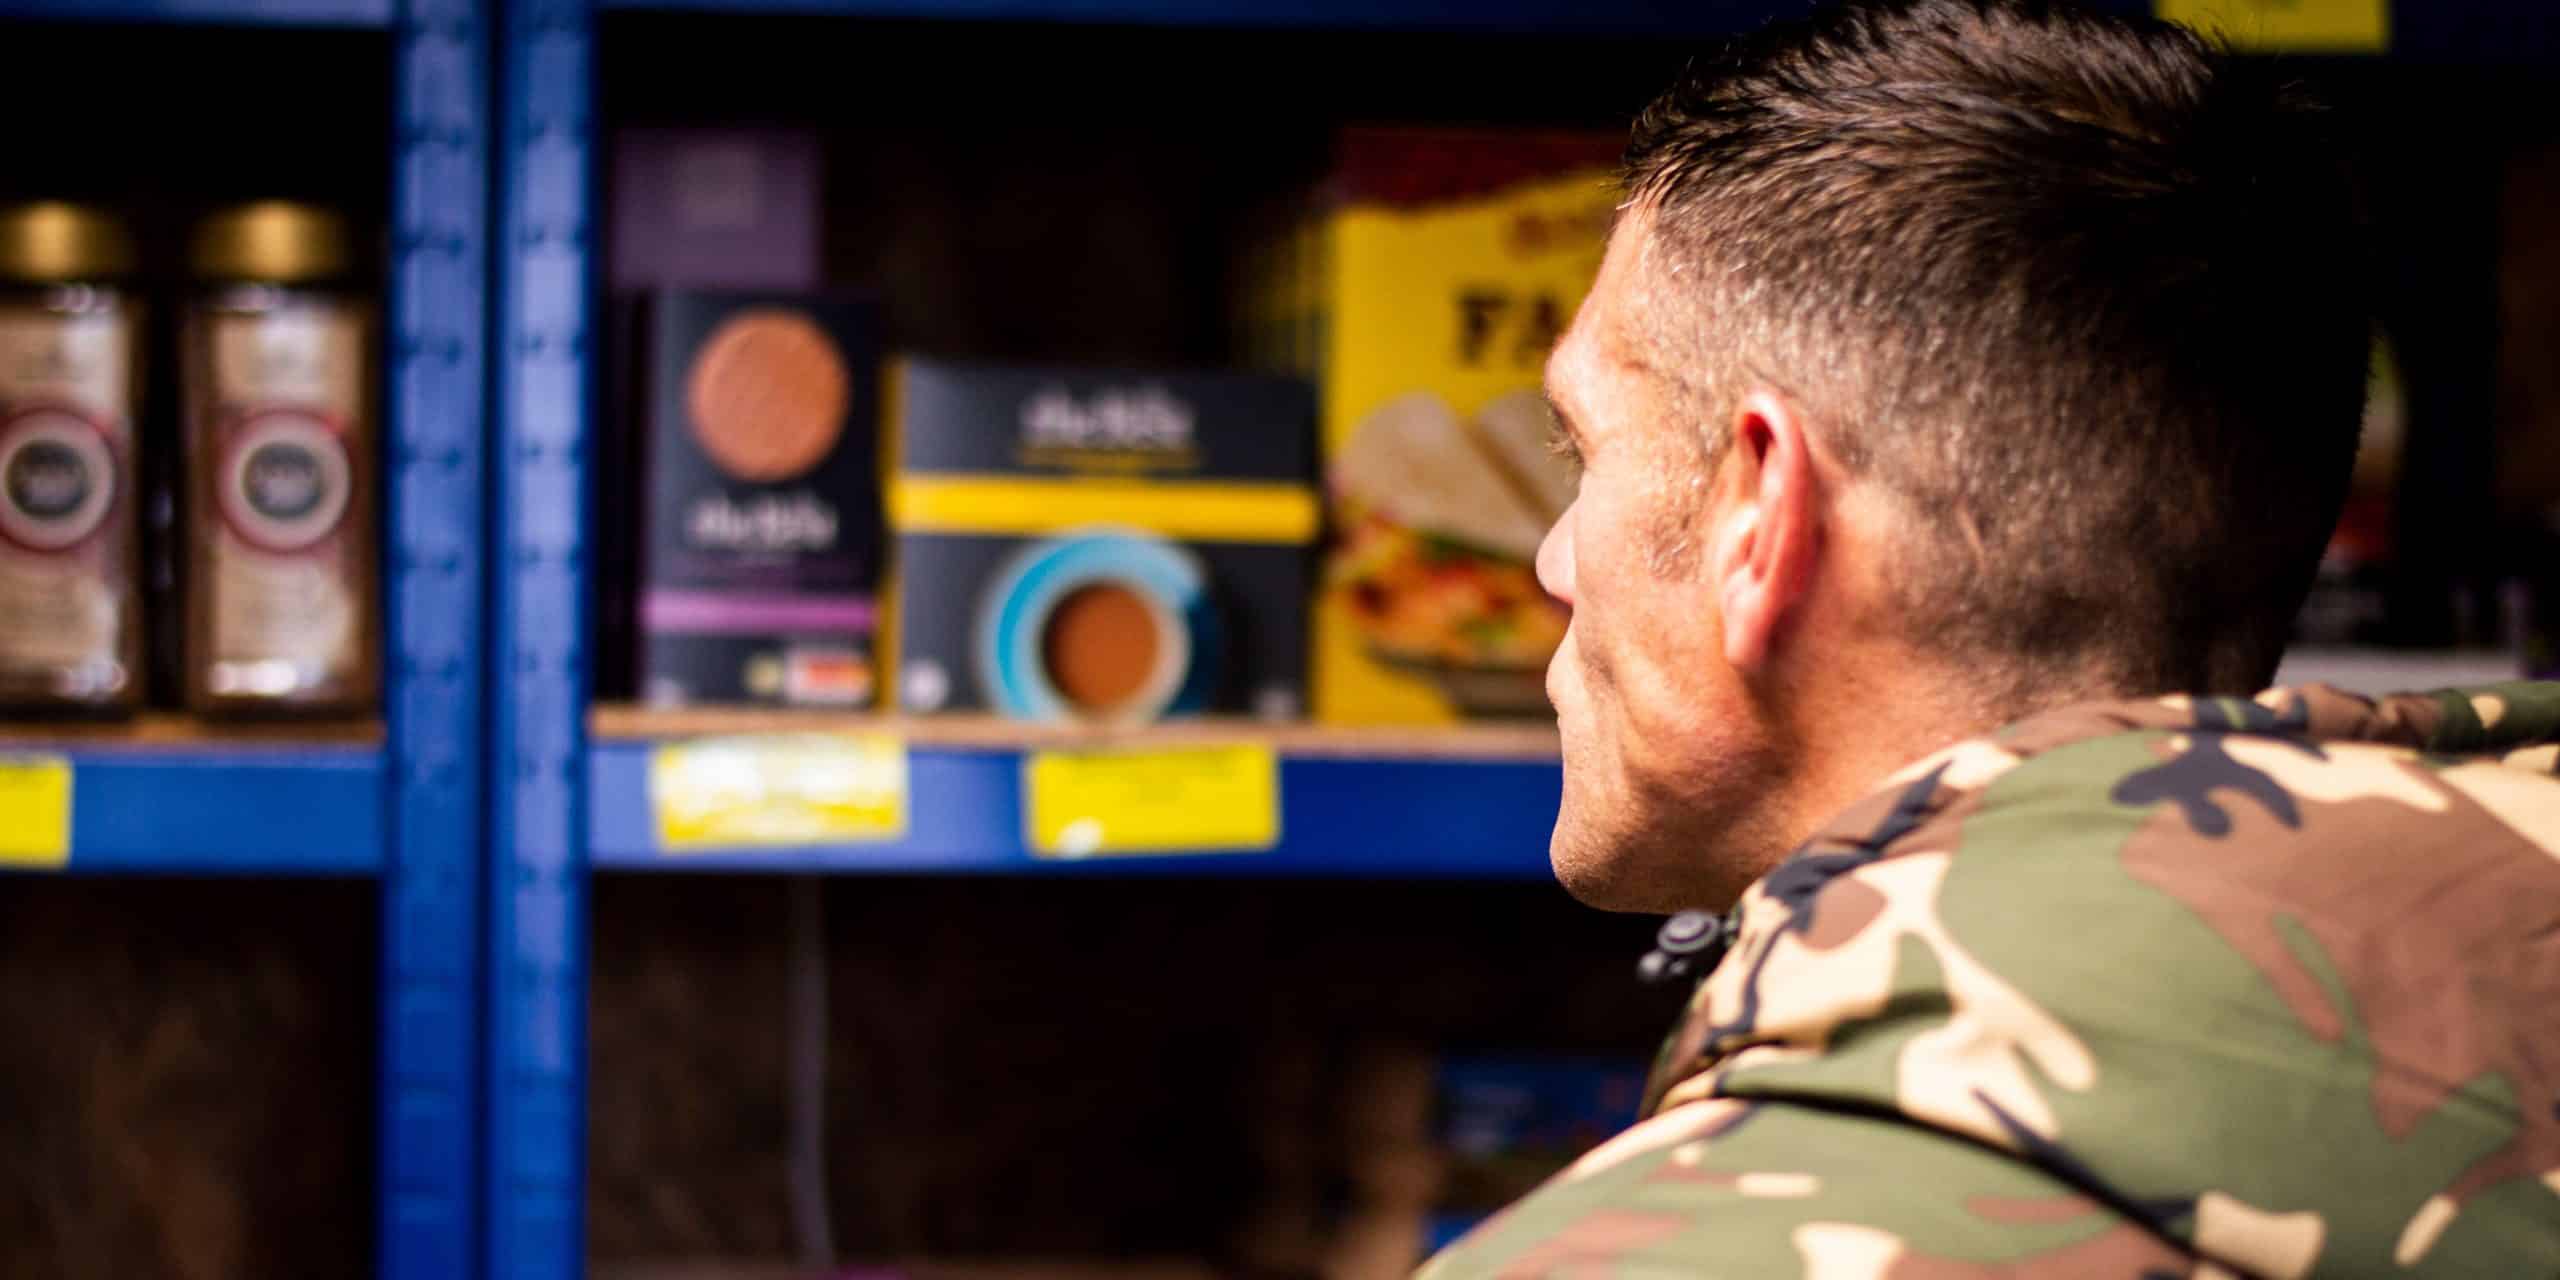 a man browsing shop shelves